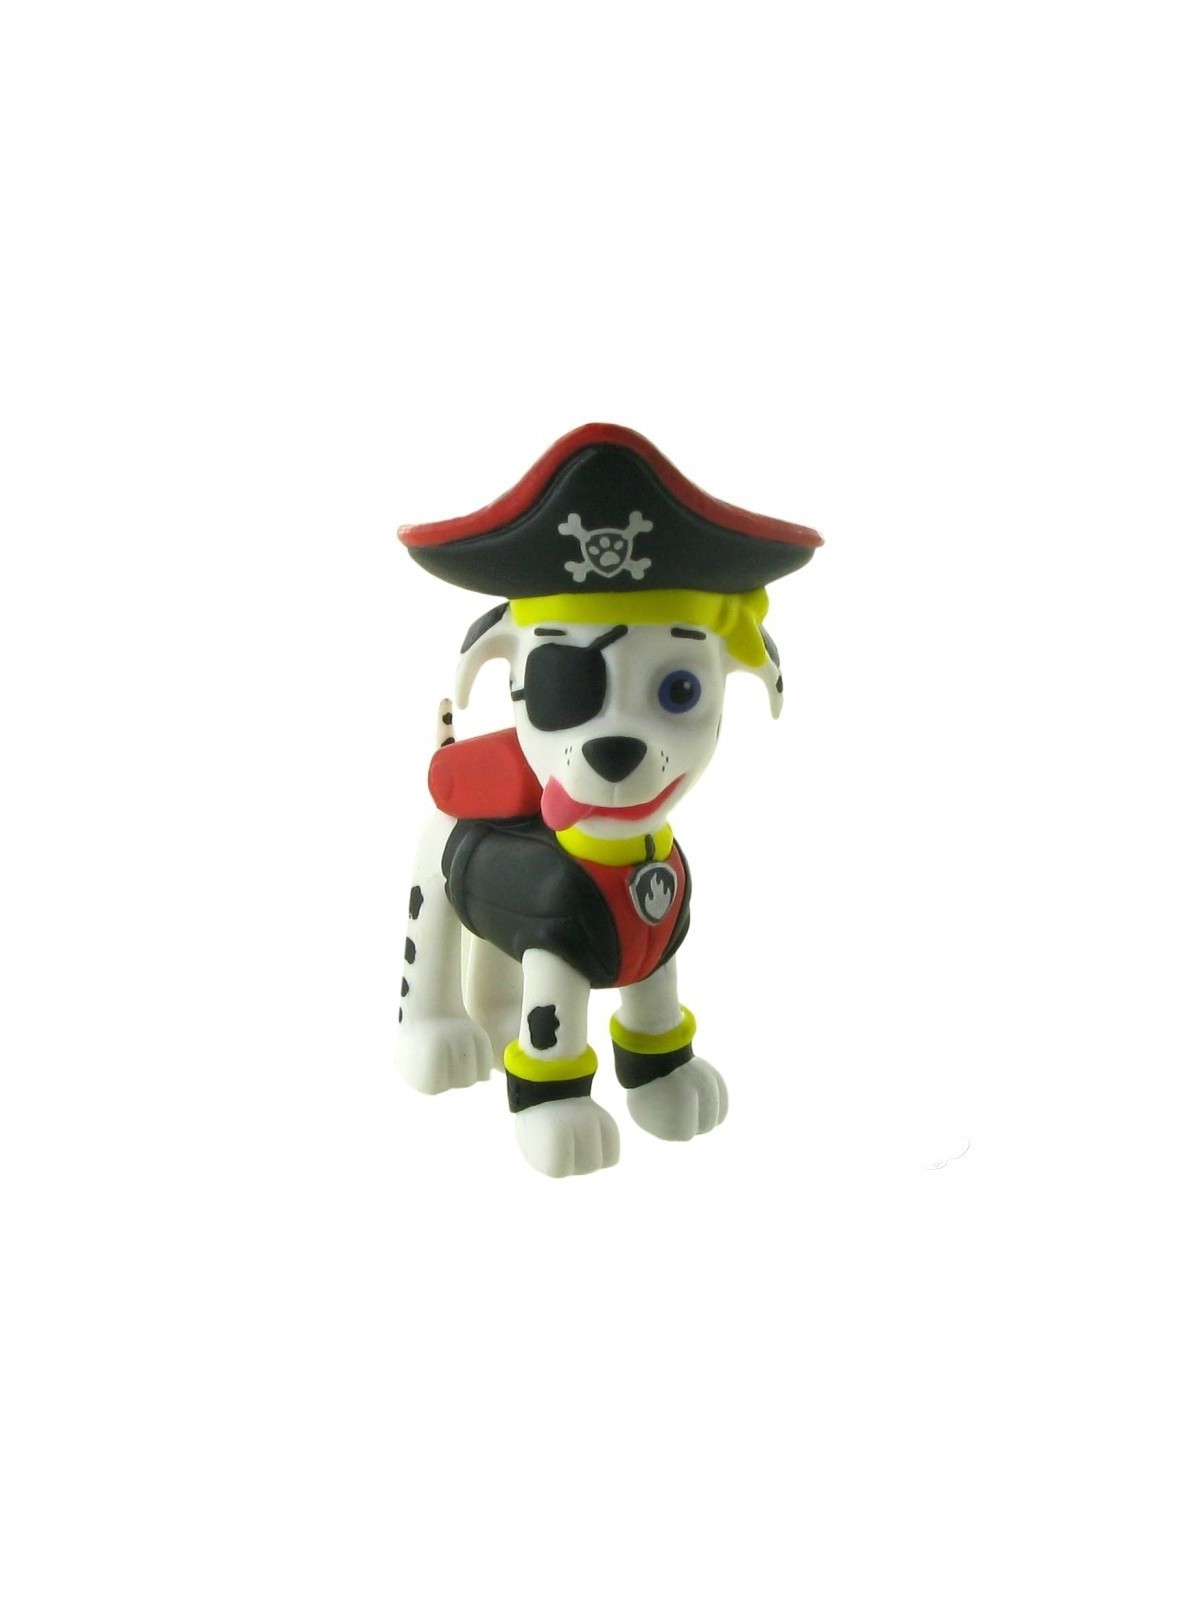 Dekorative Figur Paw Patrol - Marshall Pirat